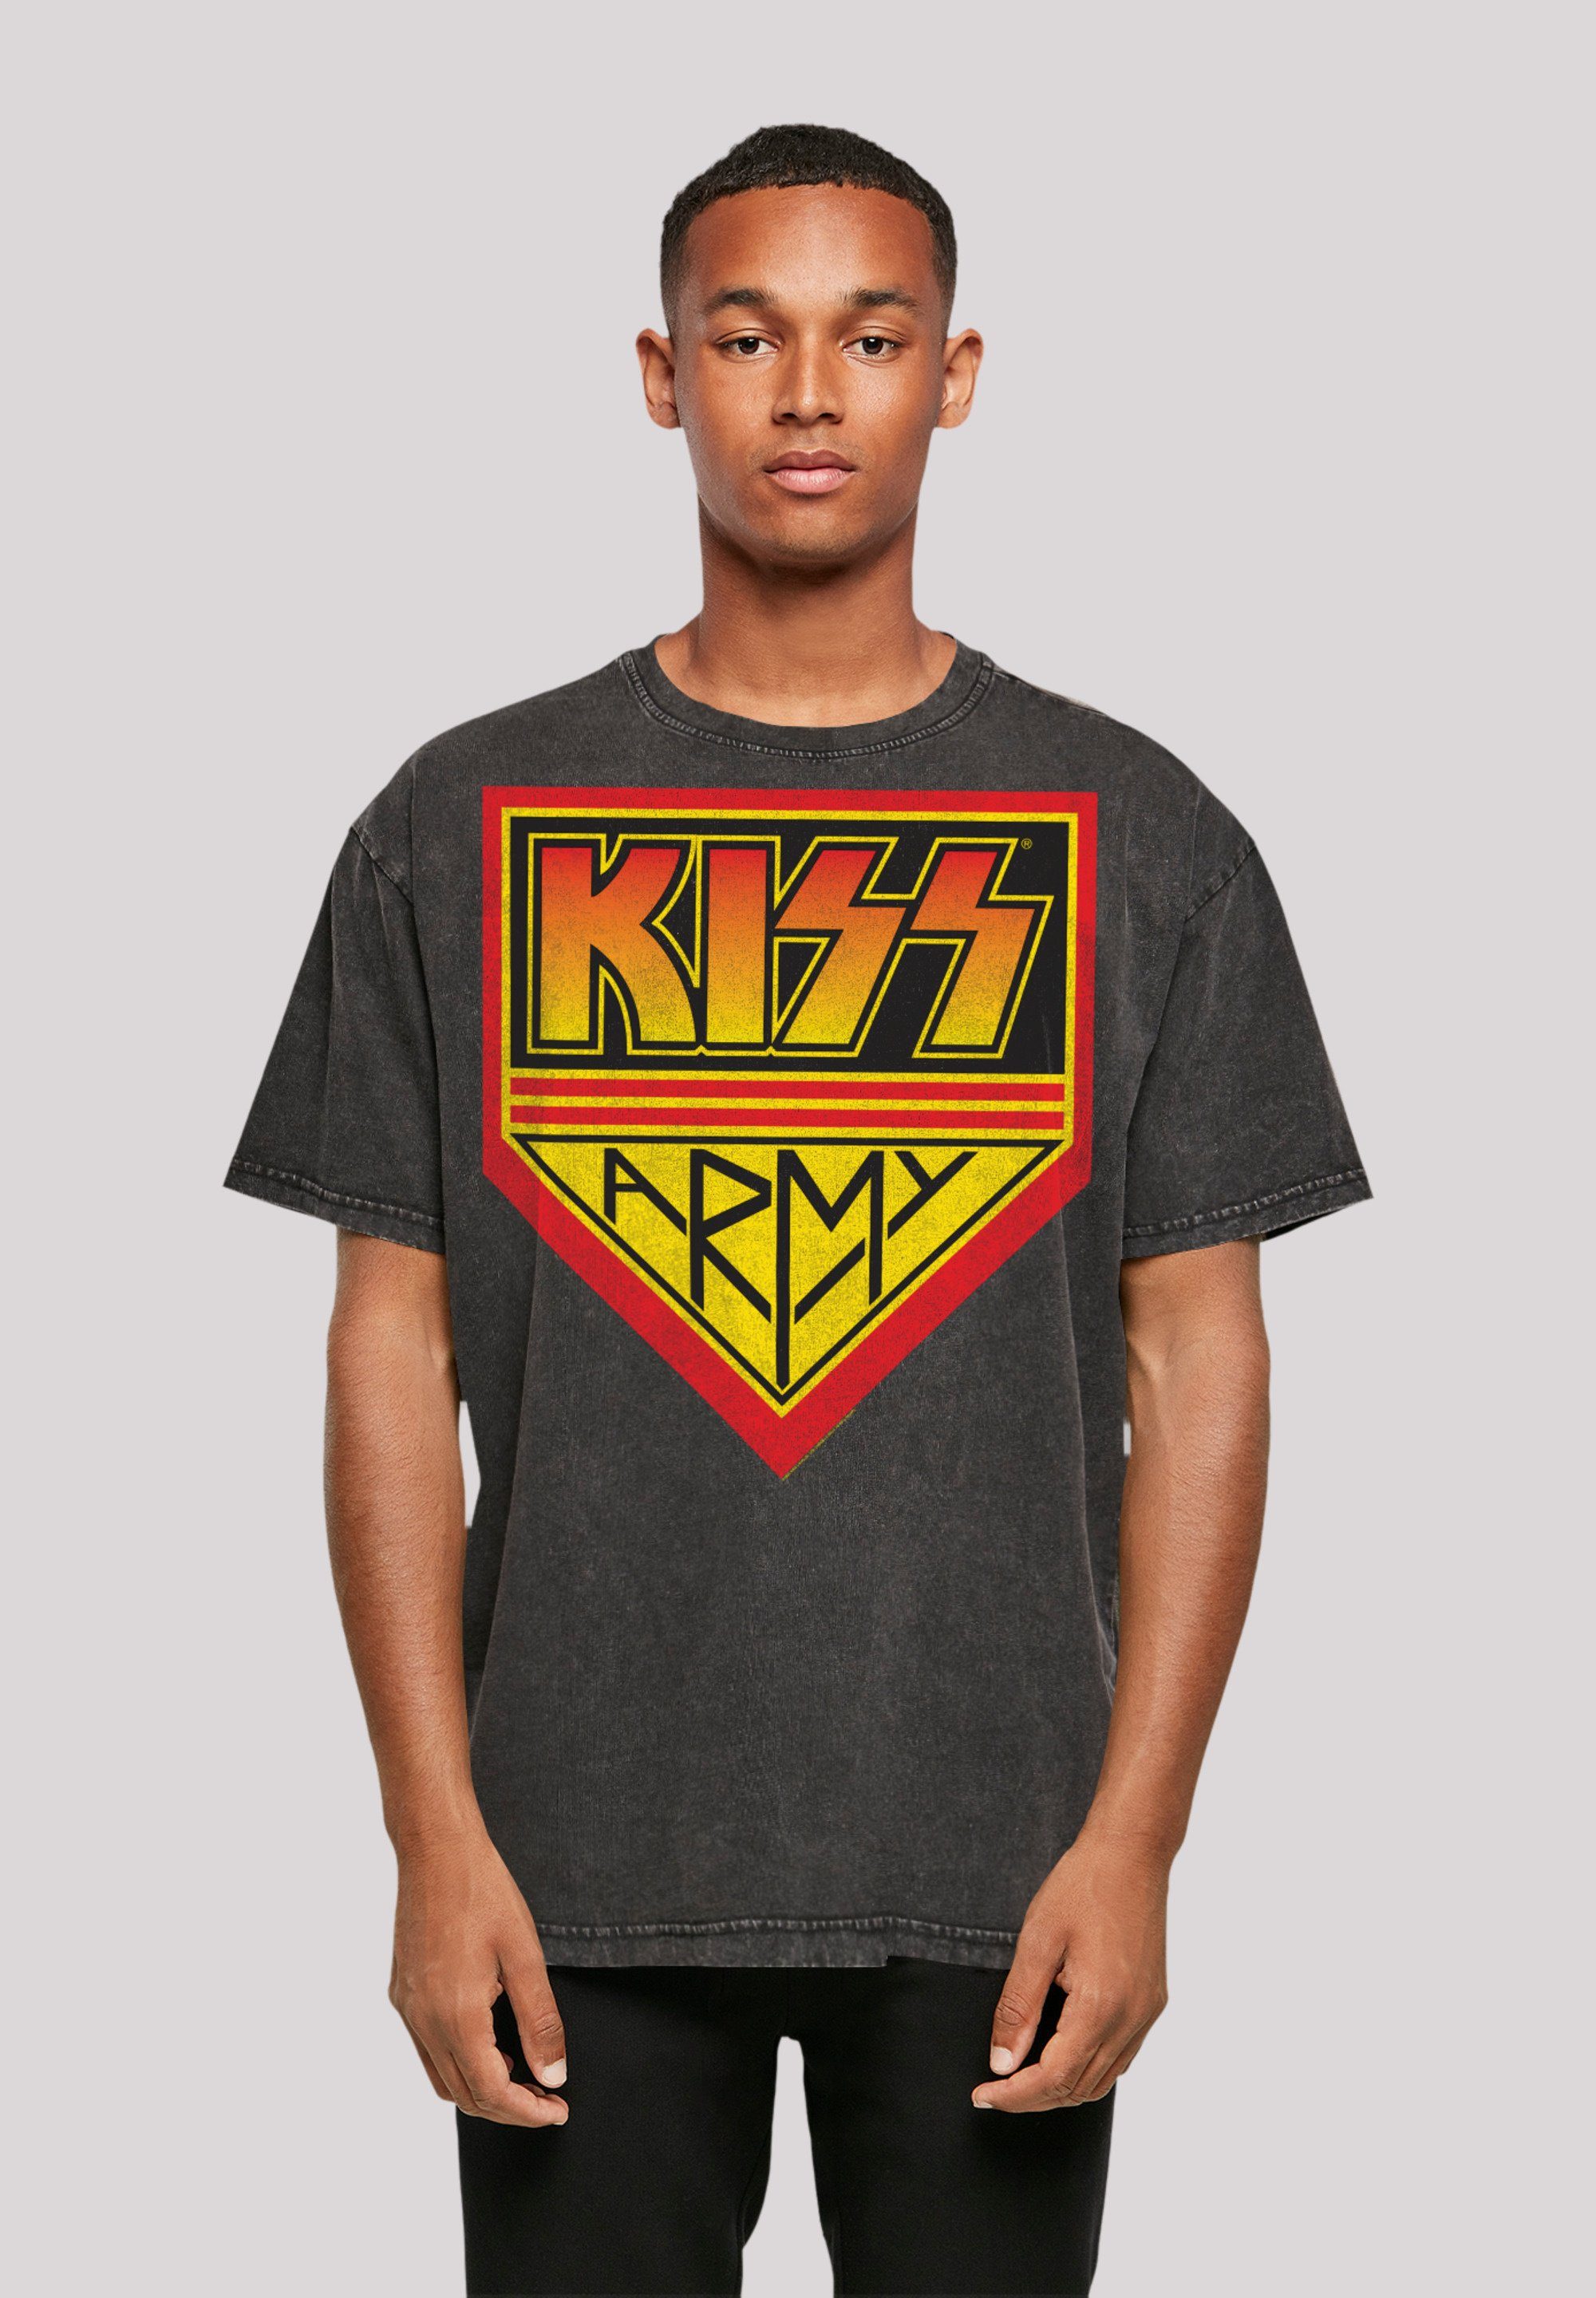 F4NT4STIC Band Qualität, Logo schwarz Off Rock Premium Kiss T-Shirt Musik, Army Rock By